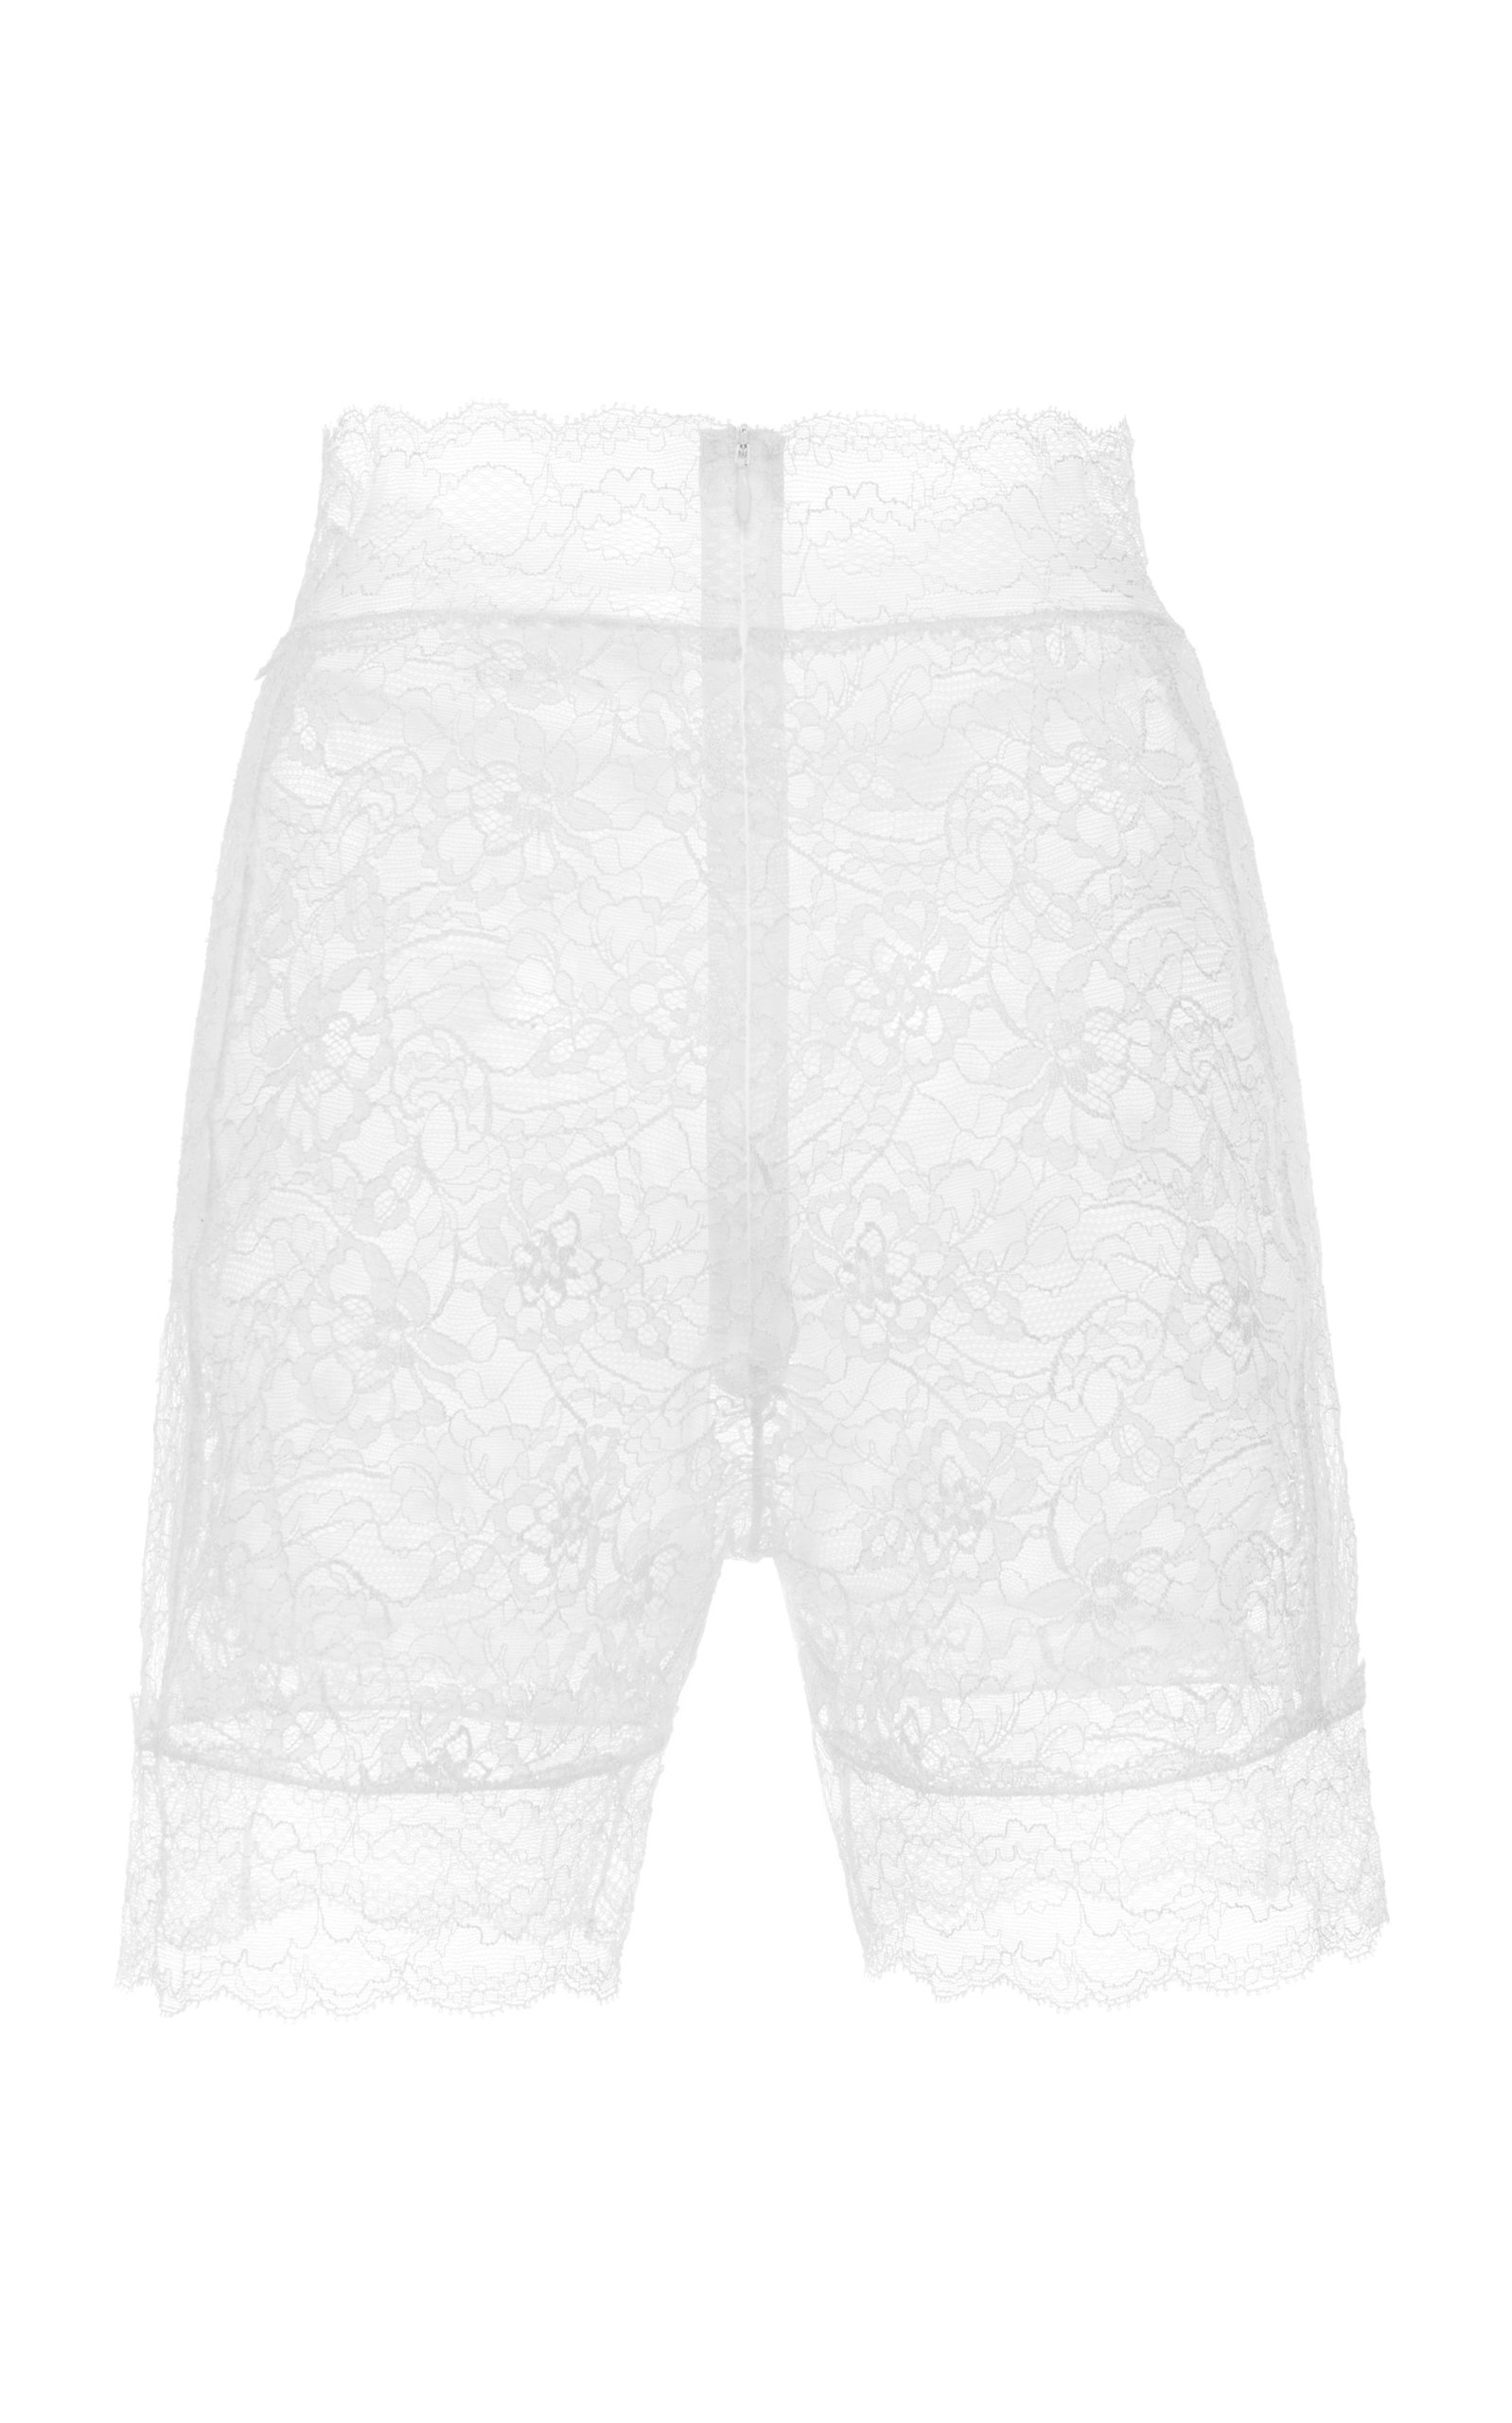 white lace bike shorts